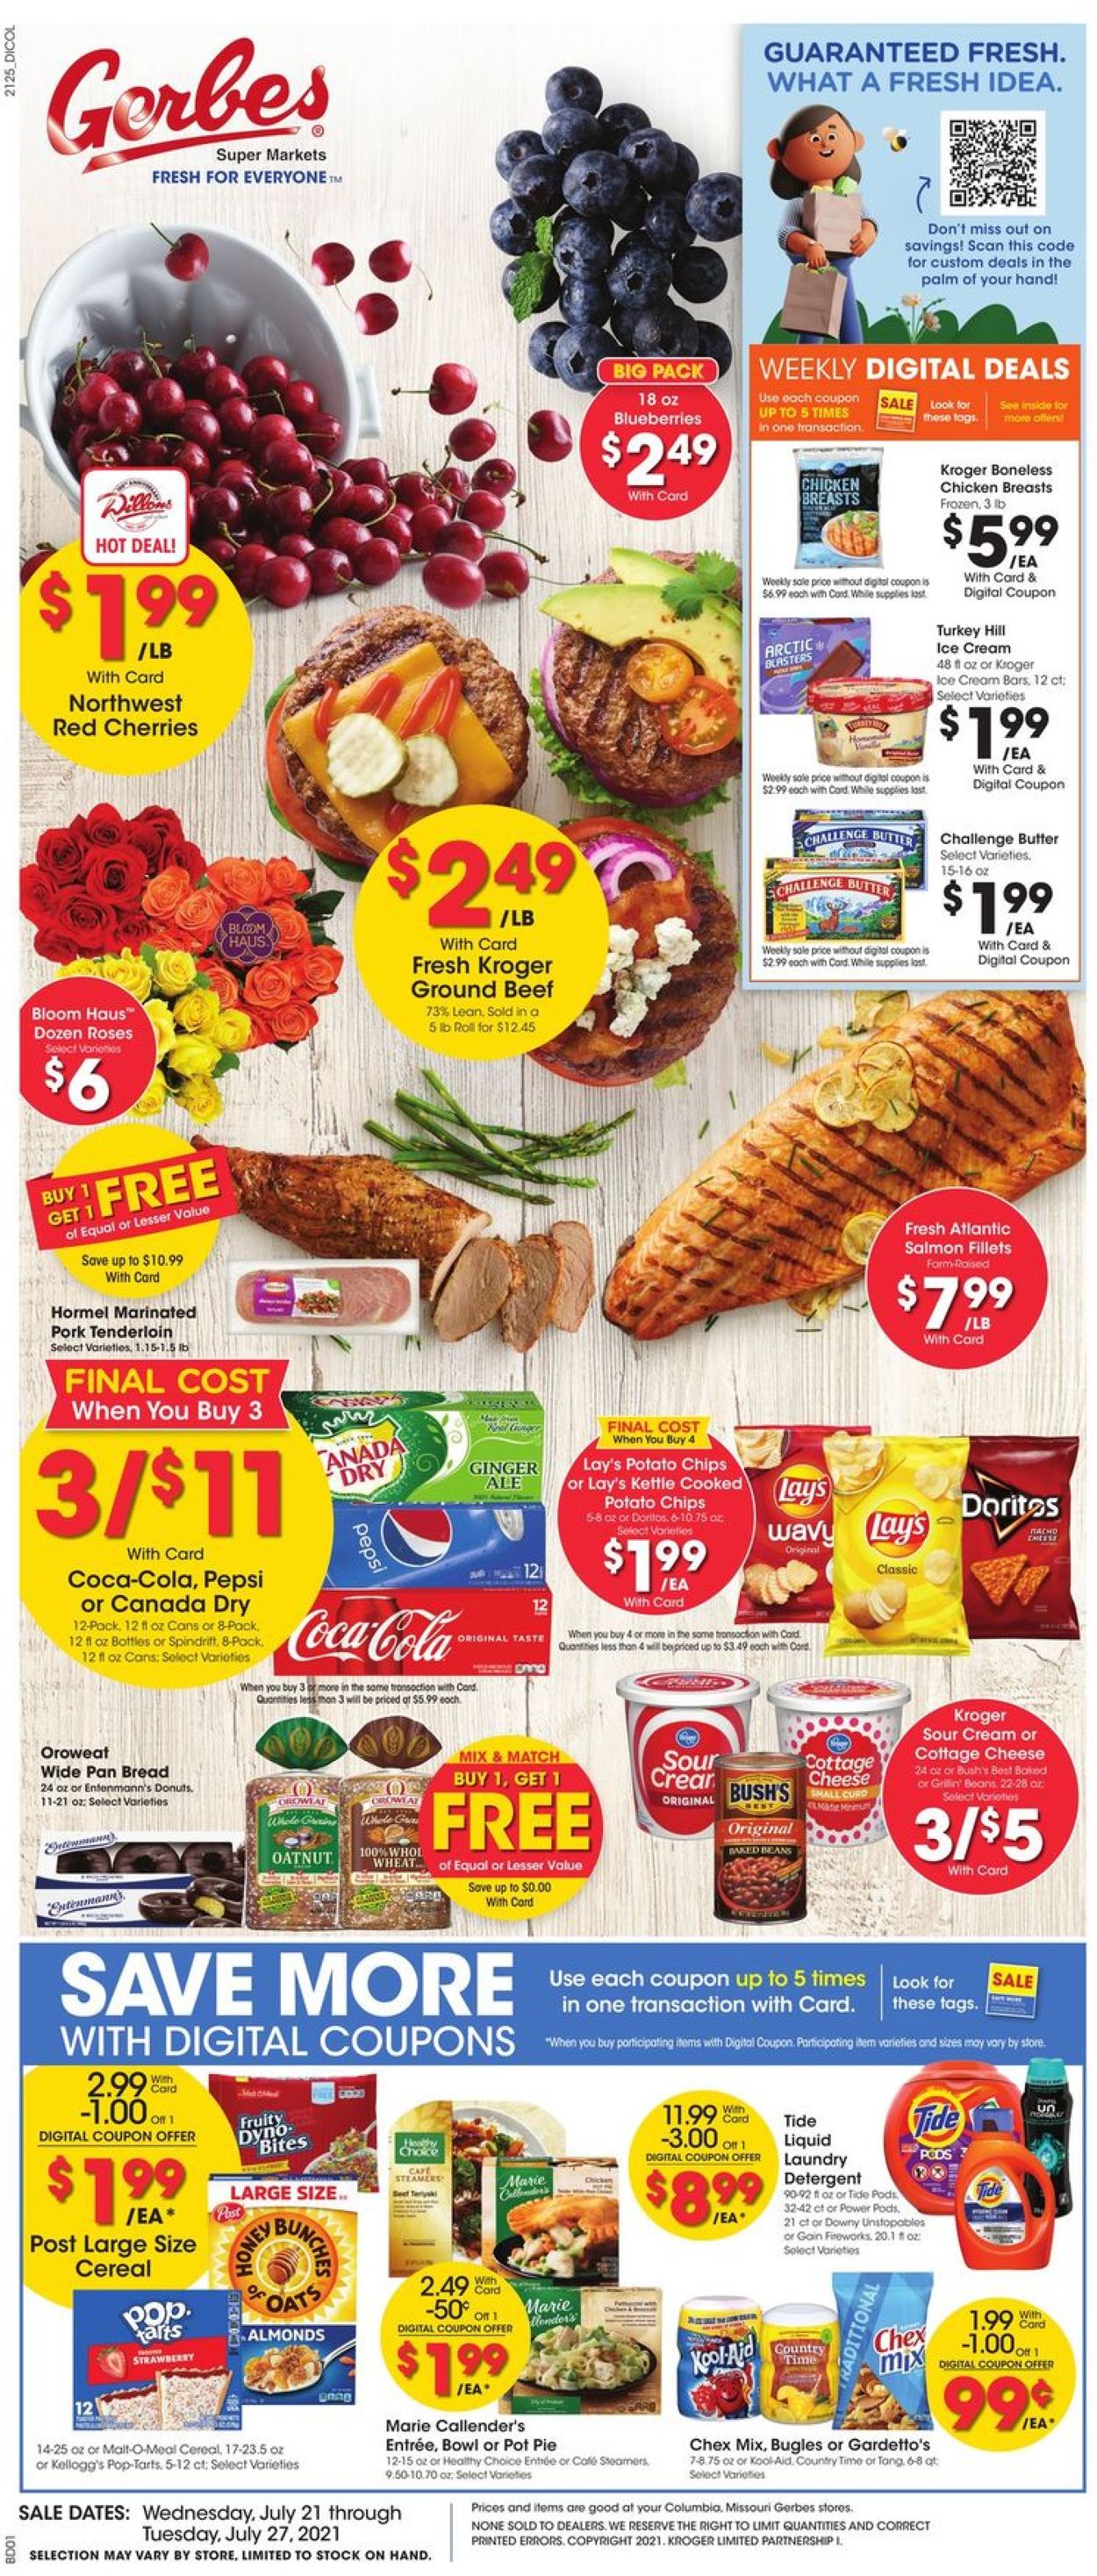 Gerbes Super Markets Ad from 07/21/2021